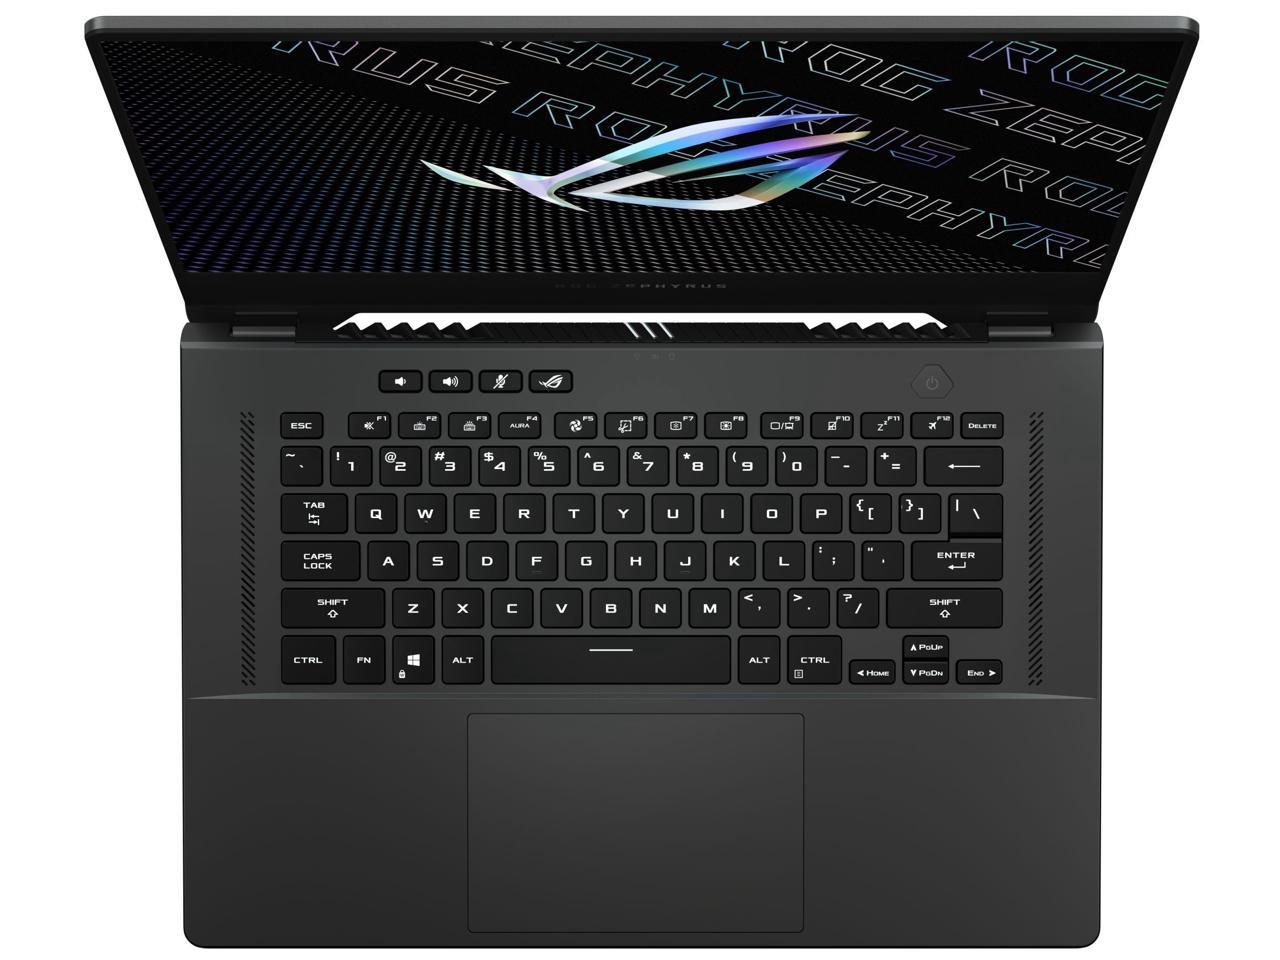 Asus Rog Zephyrus G15 Gaming & Entertainment Laptop (Amd Ryzen 9 5900Hs 8-Core, 24Gb Ram, 1Tb Pcie